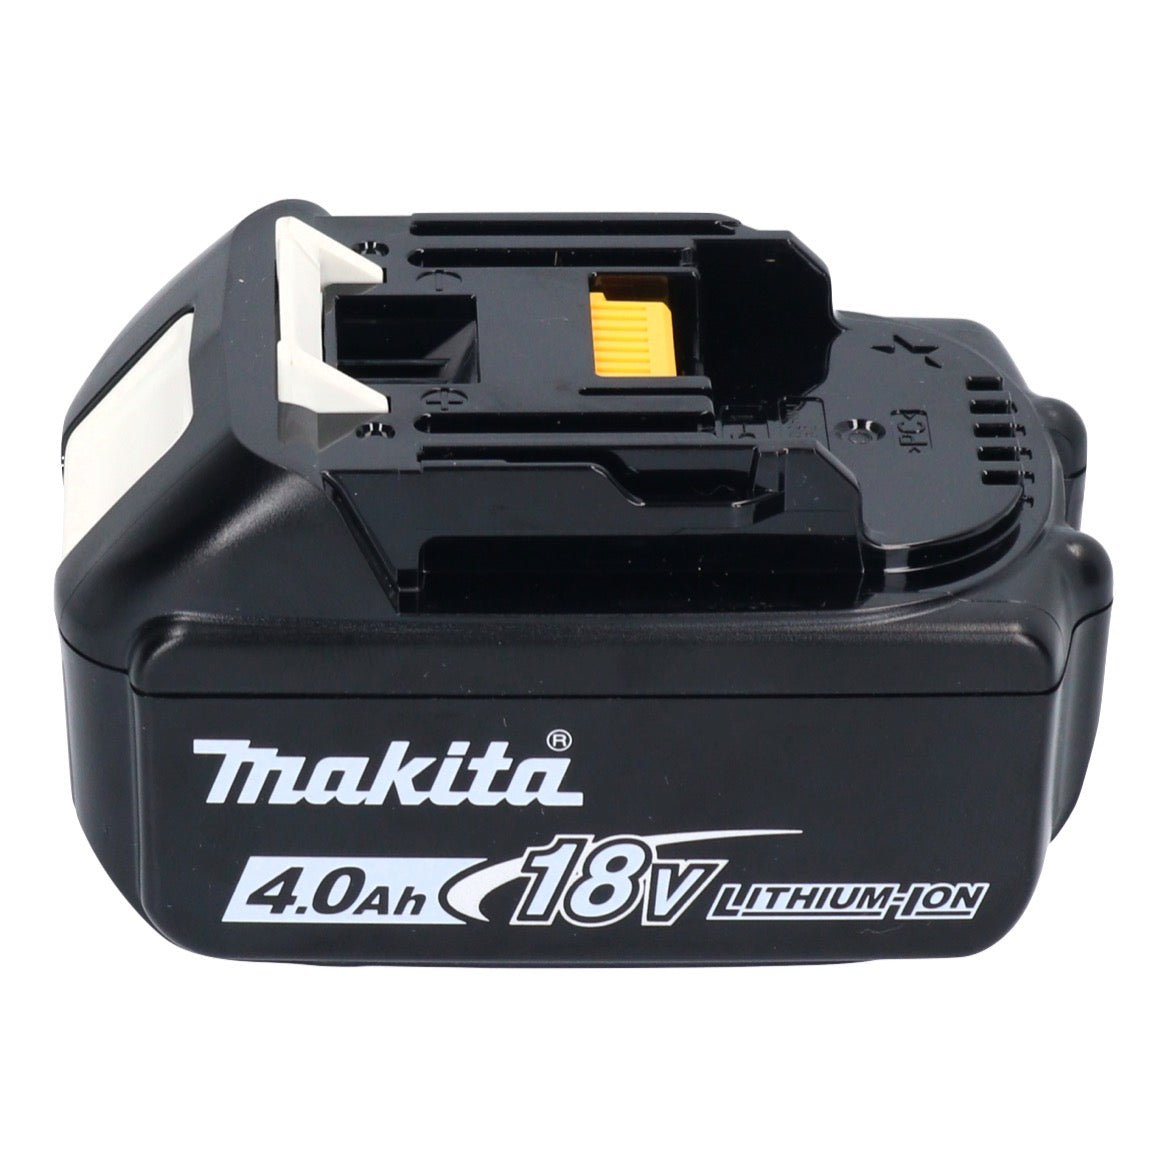 Makita DDF 489 M1J Akku Bohrschrauber 18 V 73 Nm Brushless + 1x Akku 4,0 Ah + Makpac - ohne Ladegerät